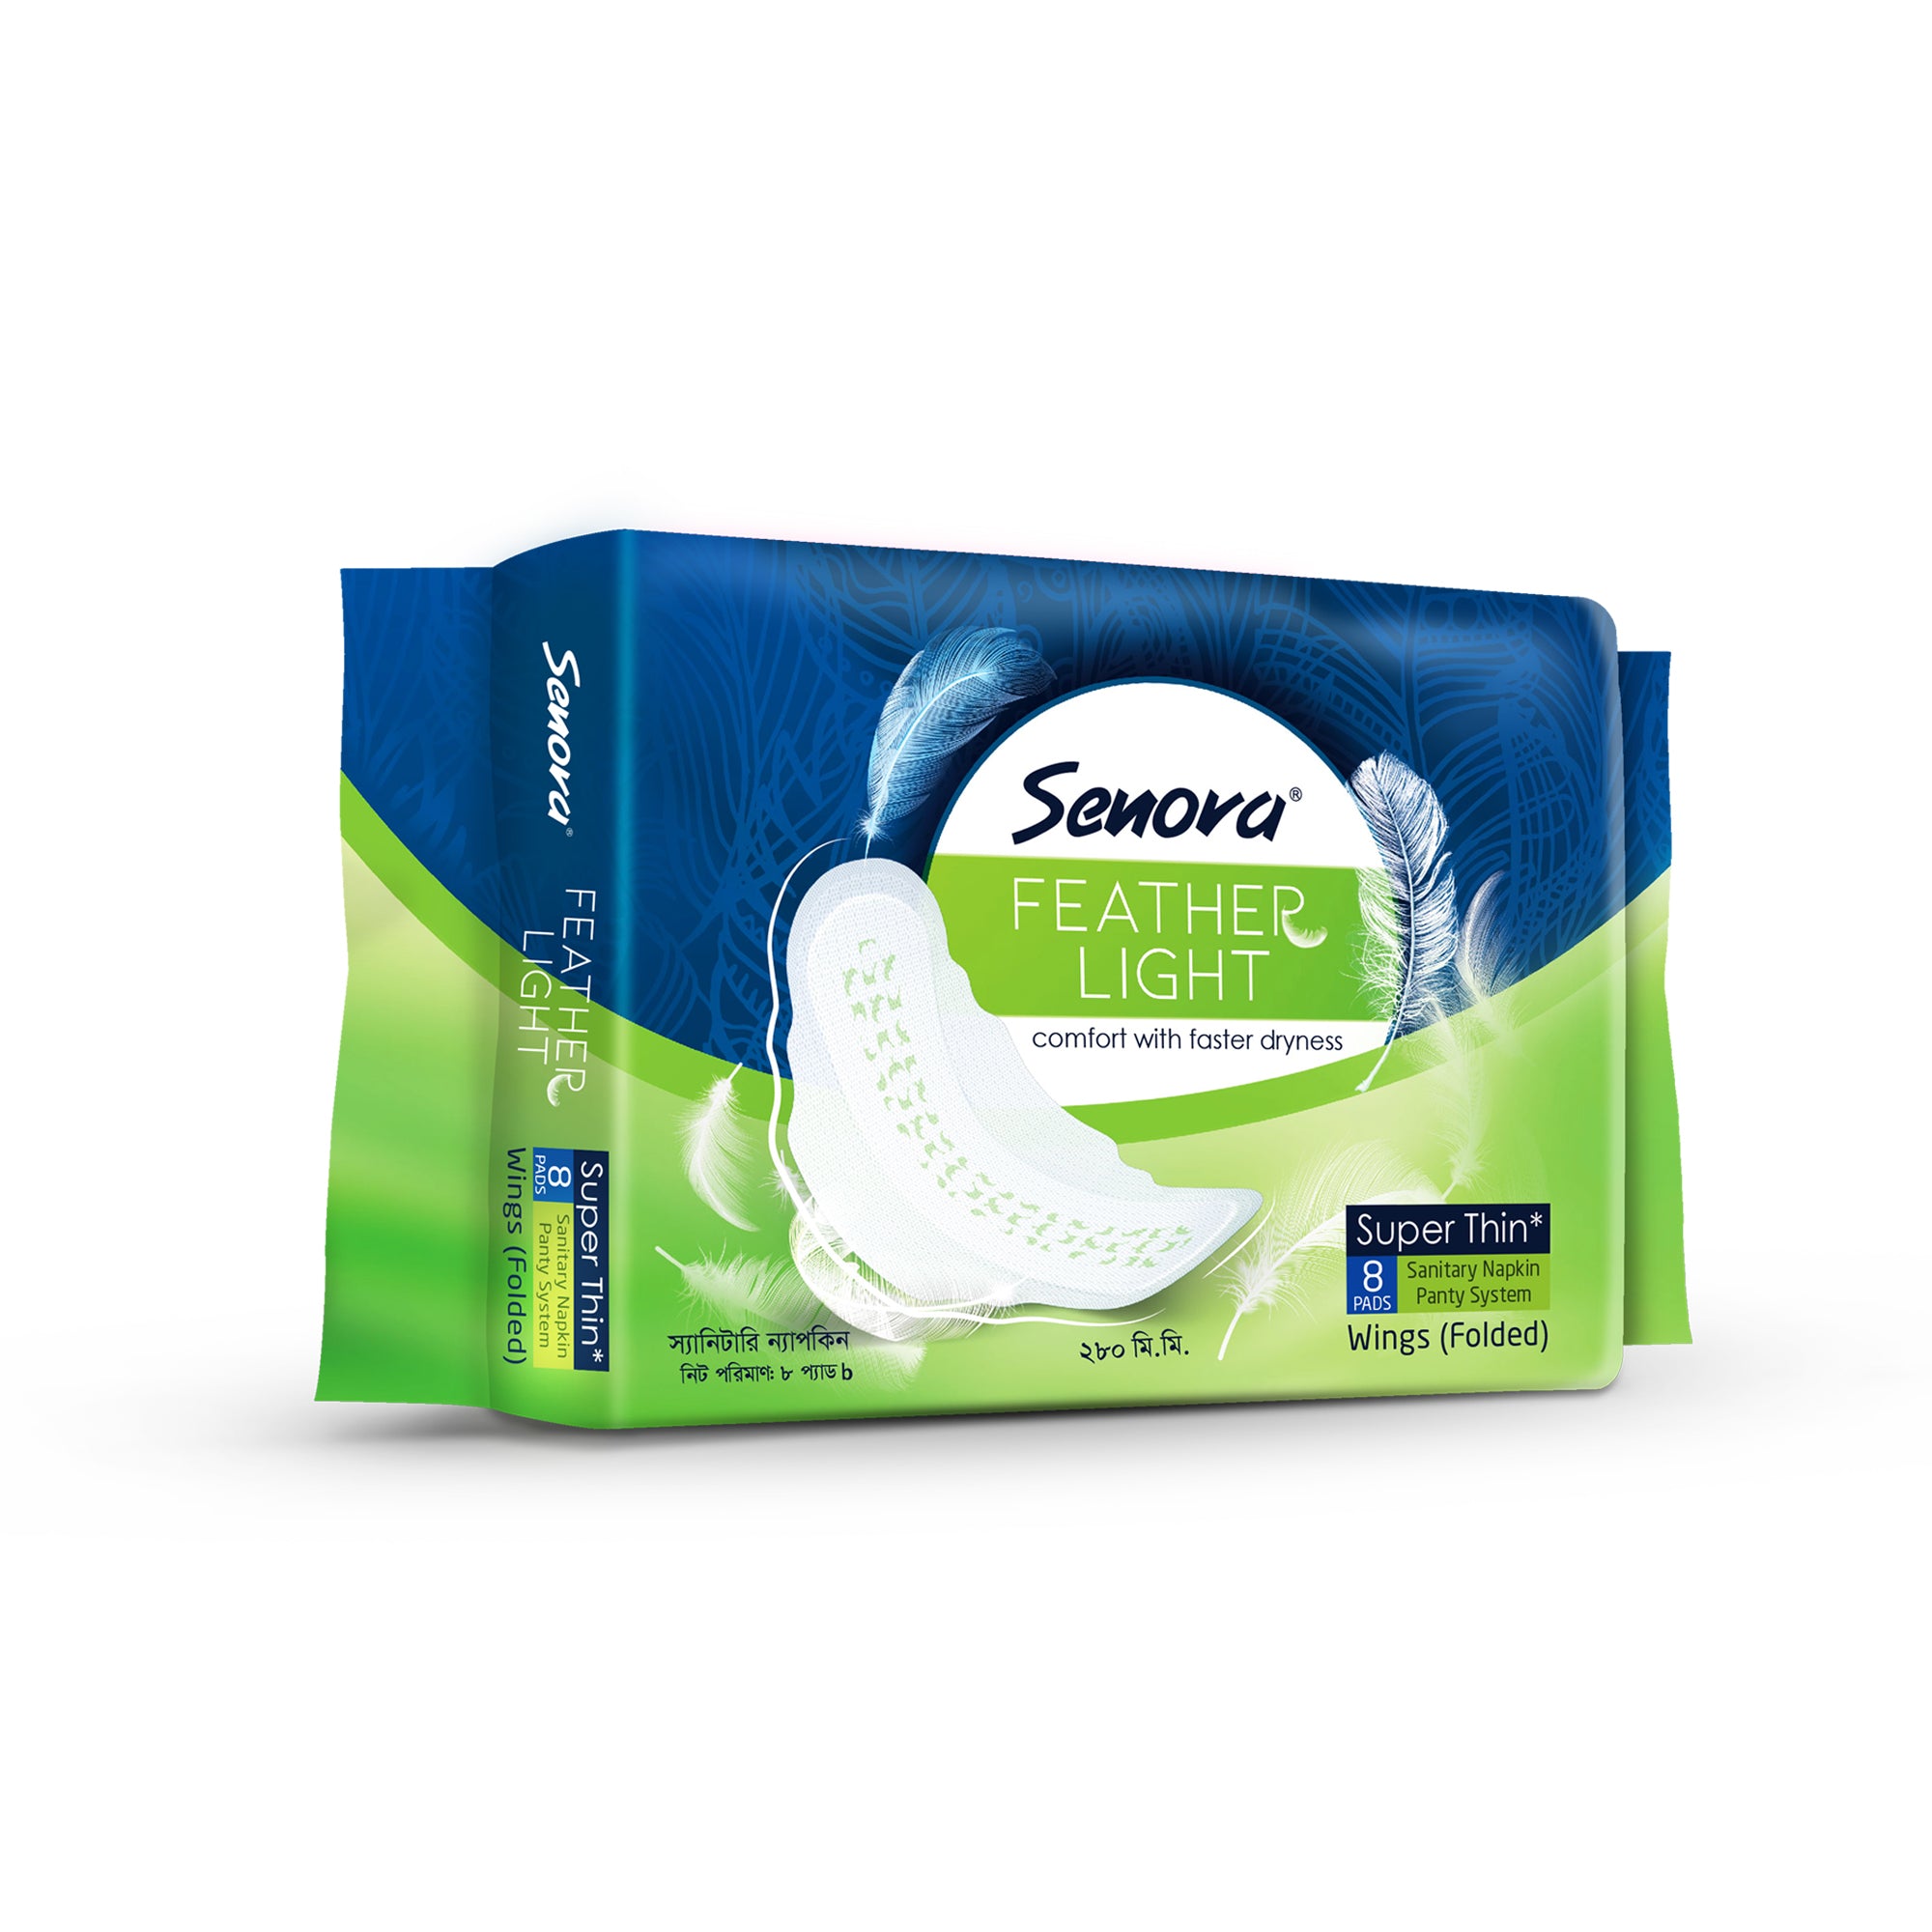 Senora Feather Light Sanitary Napkin (Panty System) 8pads